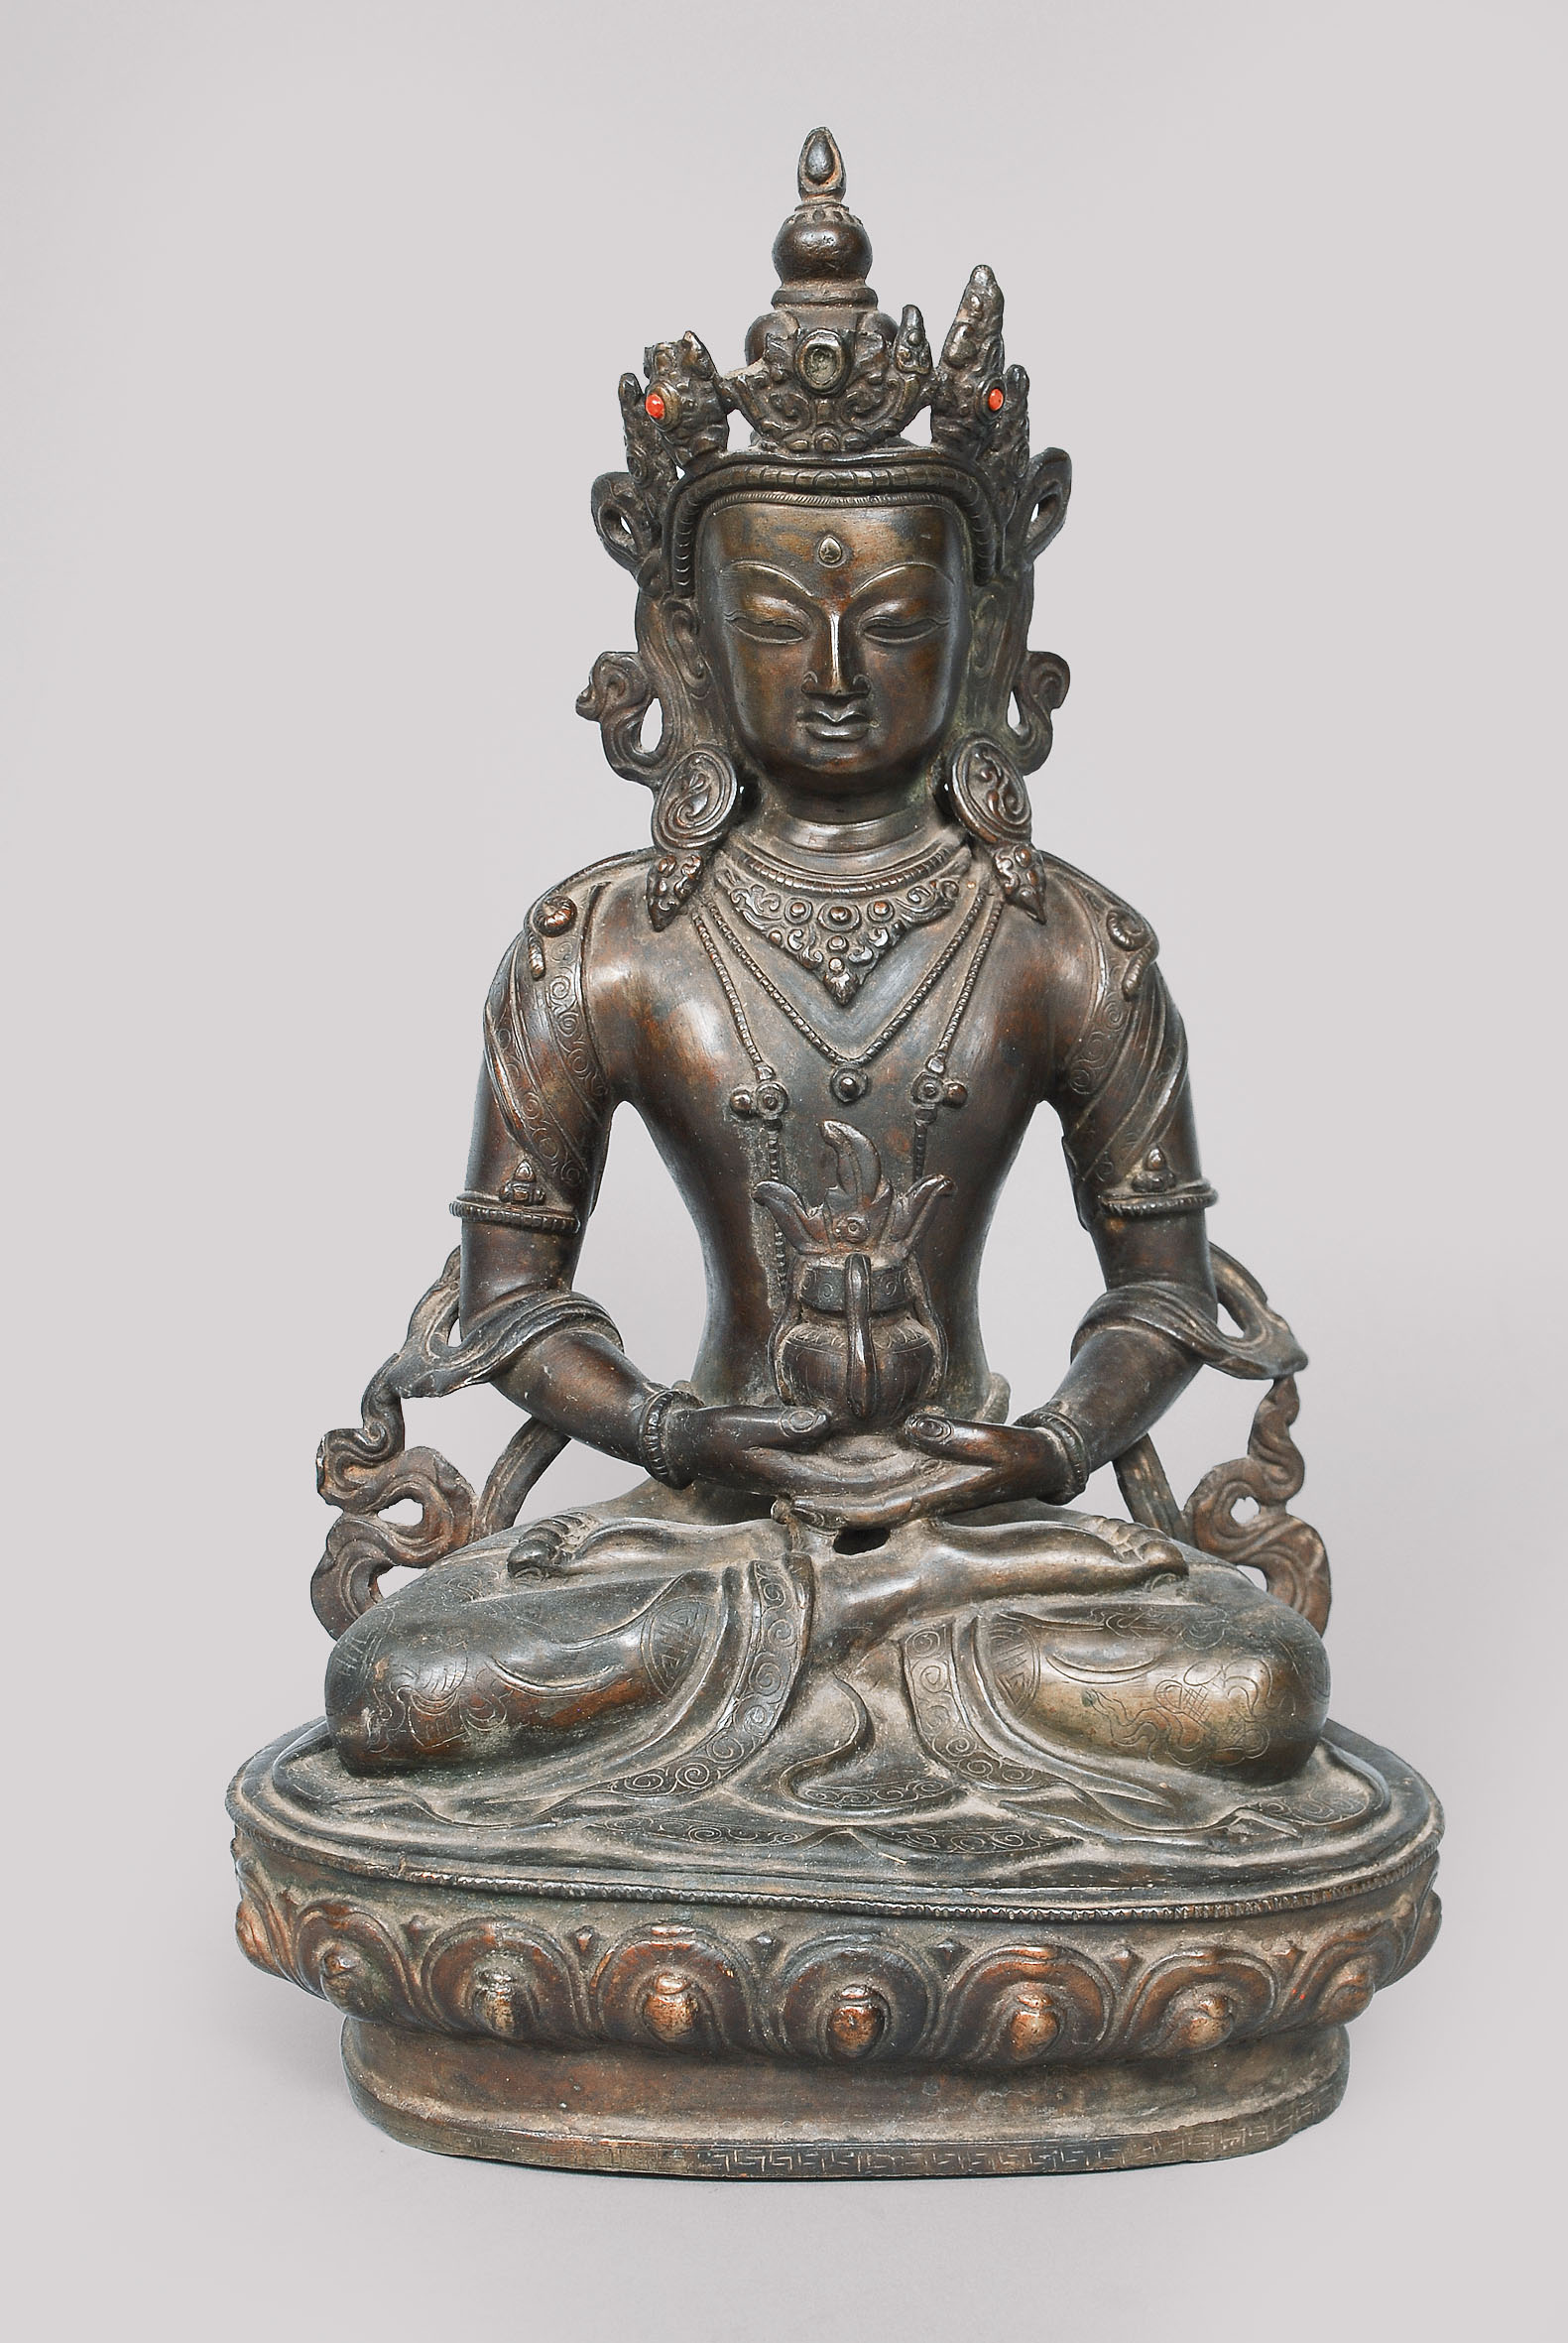 A figure "Seated buddha on lotus throne"